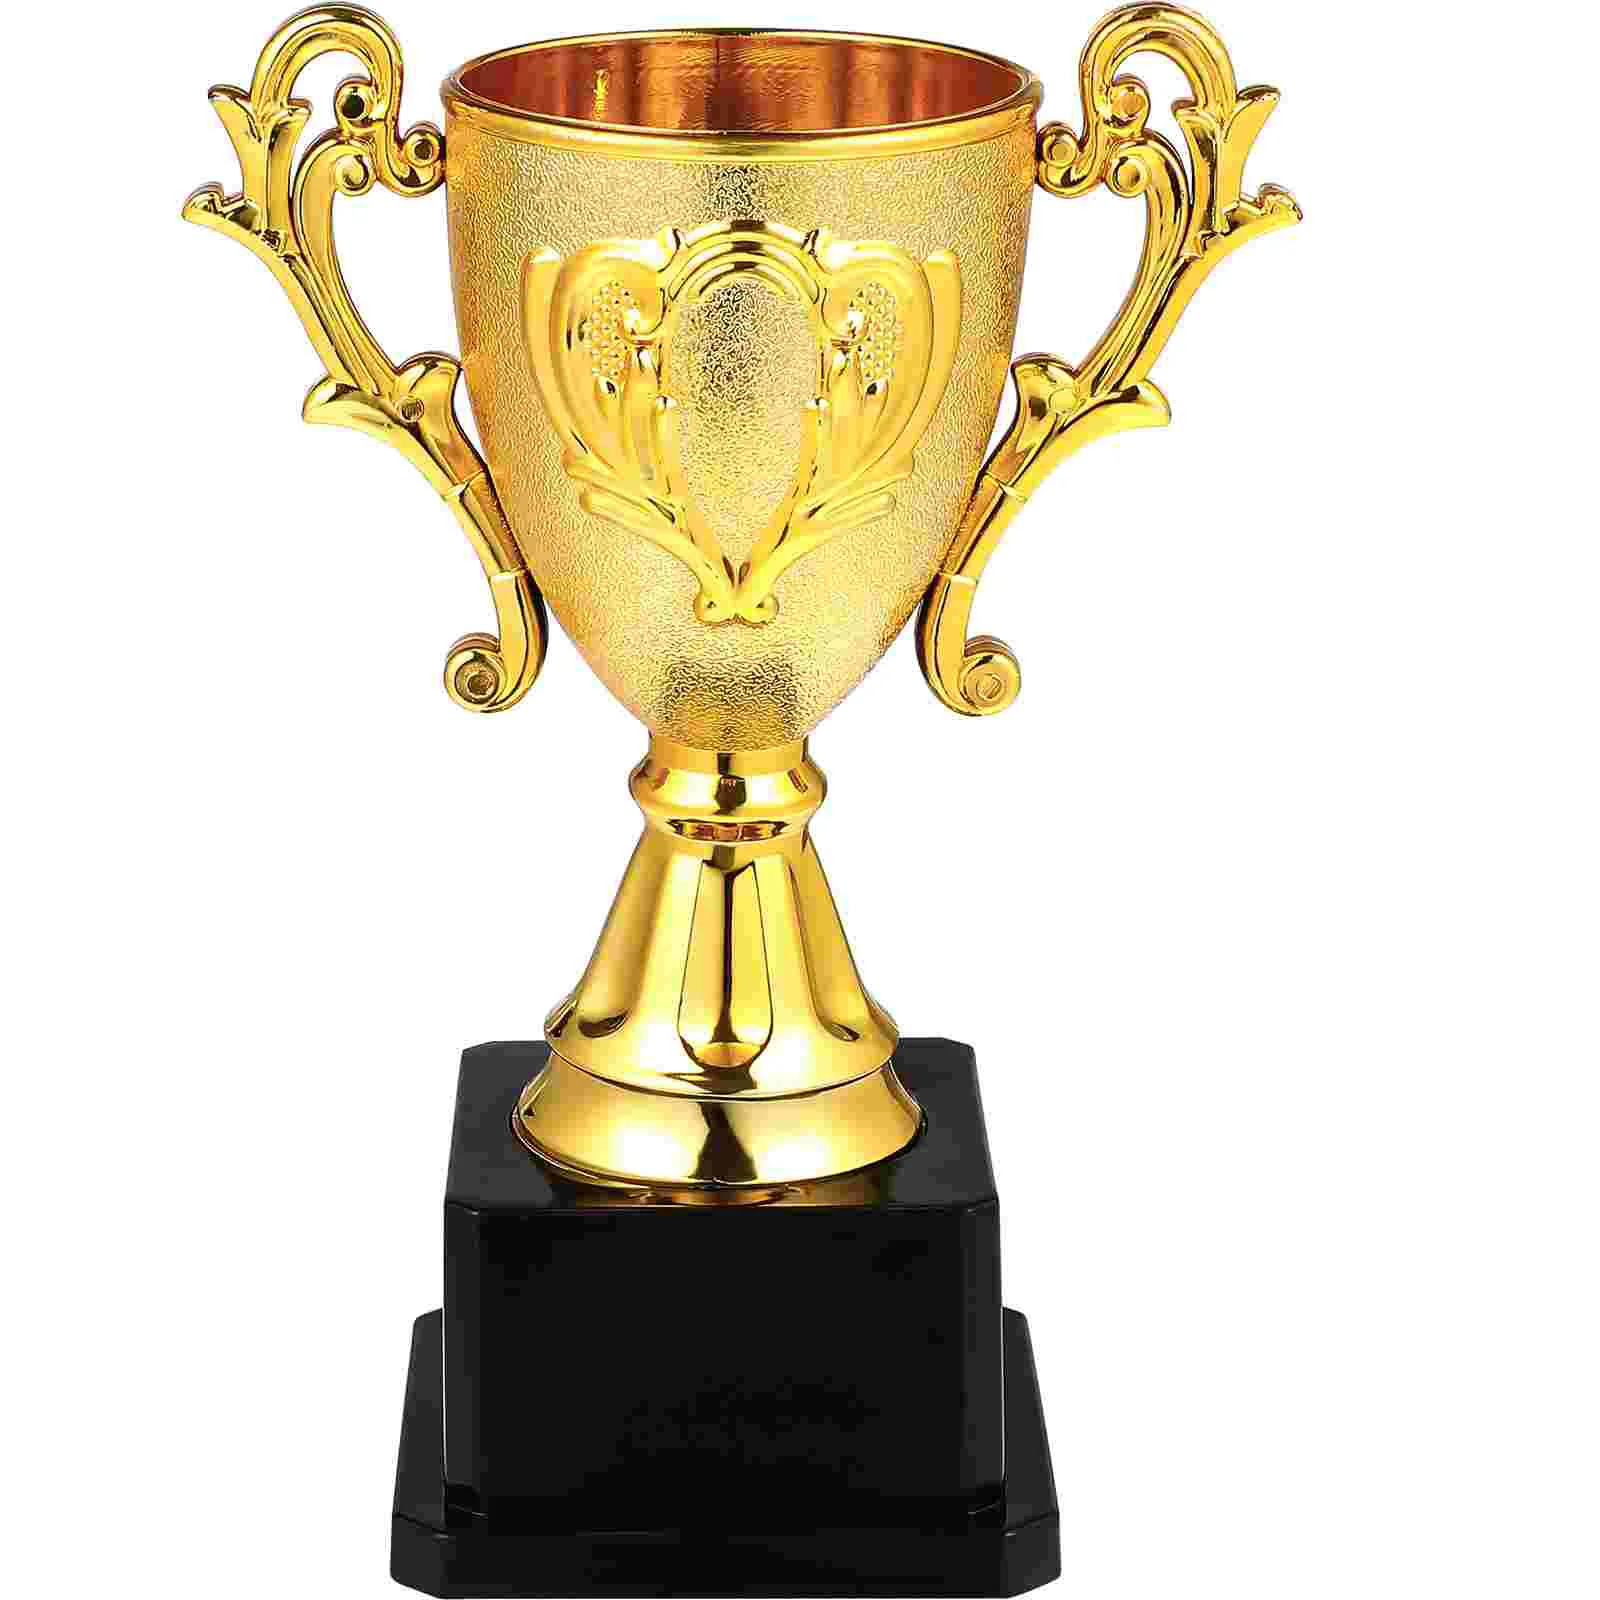 

Trophies Award Trophy Gold Plastic Winner Cups Mini Golden Cup Children Trophy Awards Gift Children Reward Toy Basketball